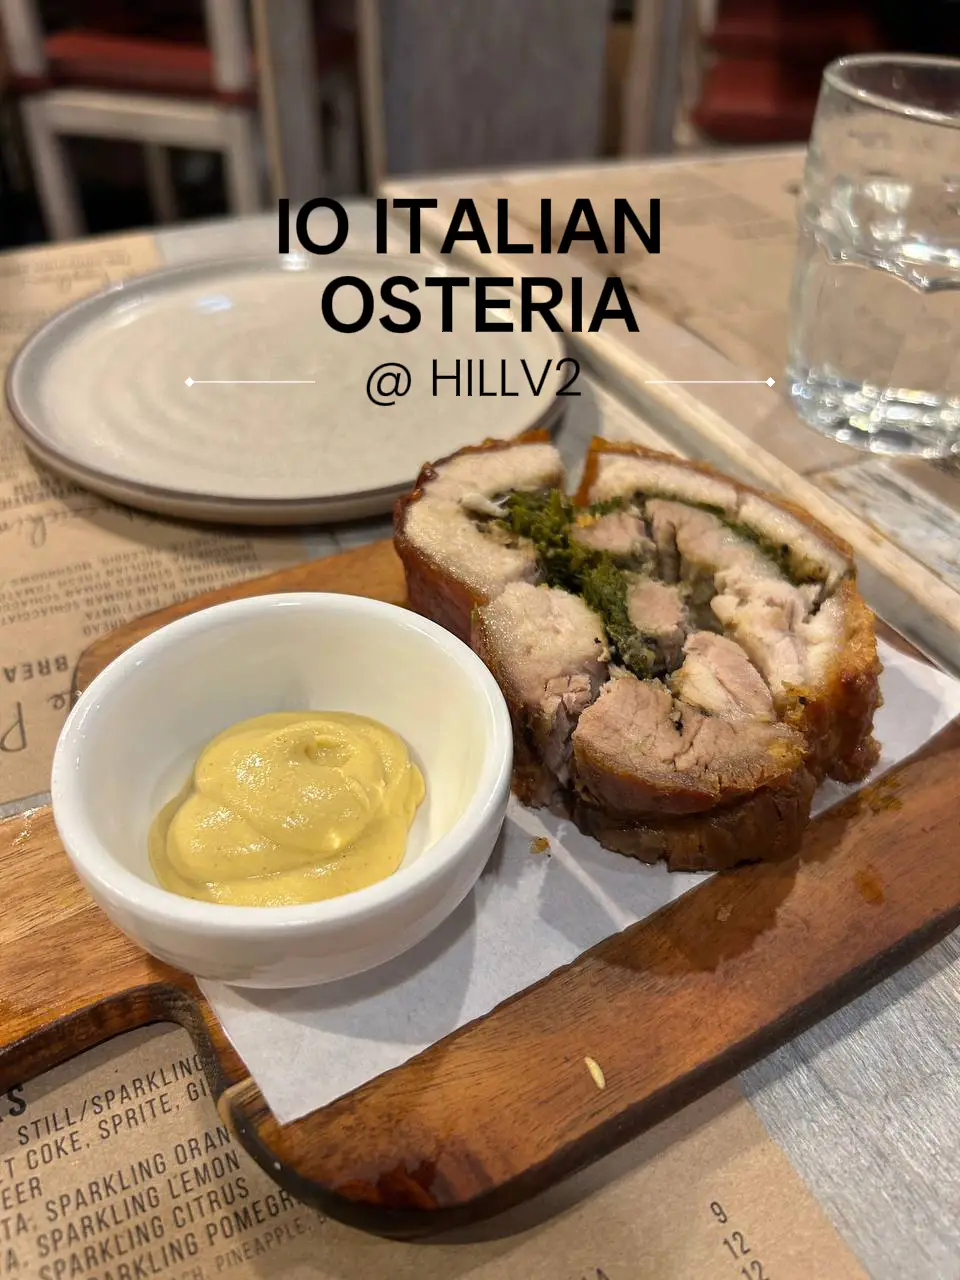 Is iO Italian Osteria overhyped? 's images(0)